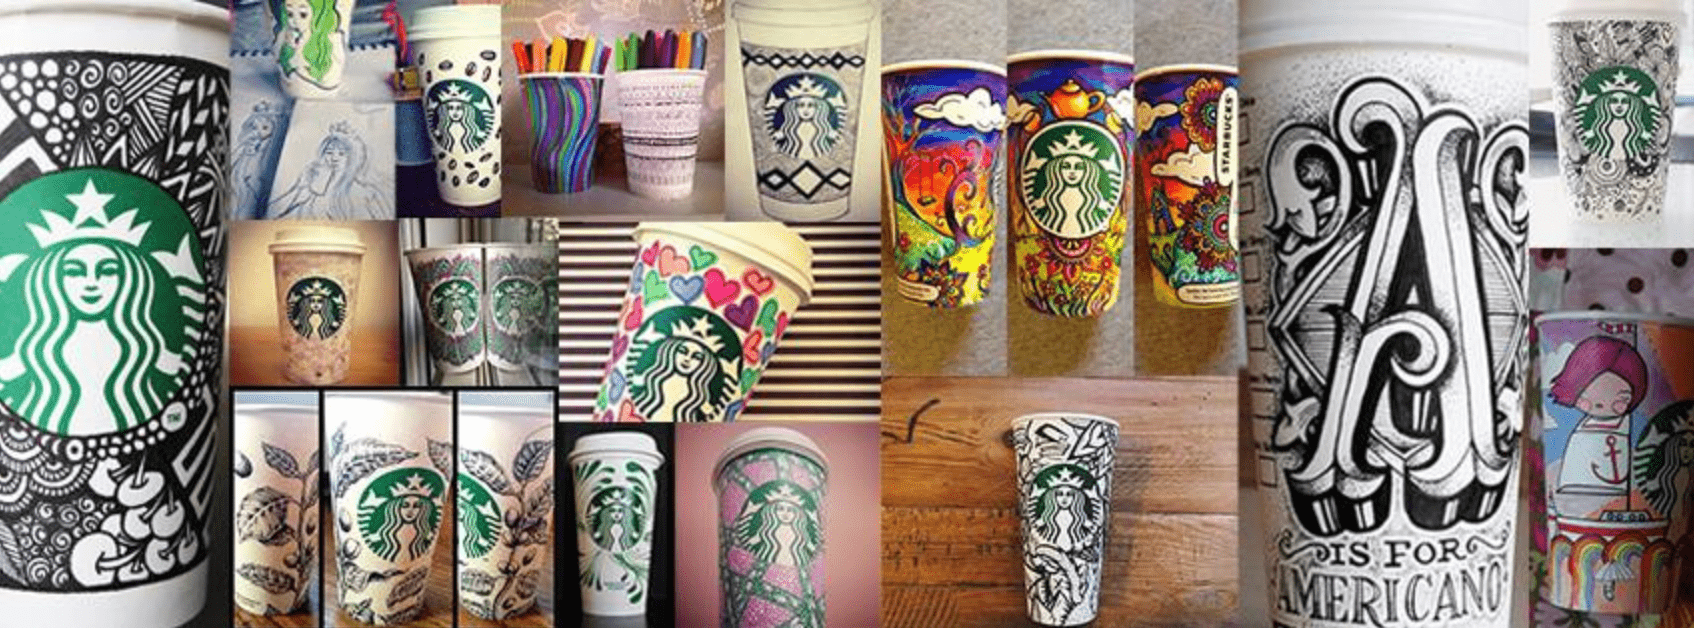 kampania Starbucks’ White Cup Contest